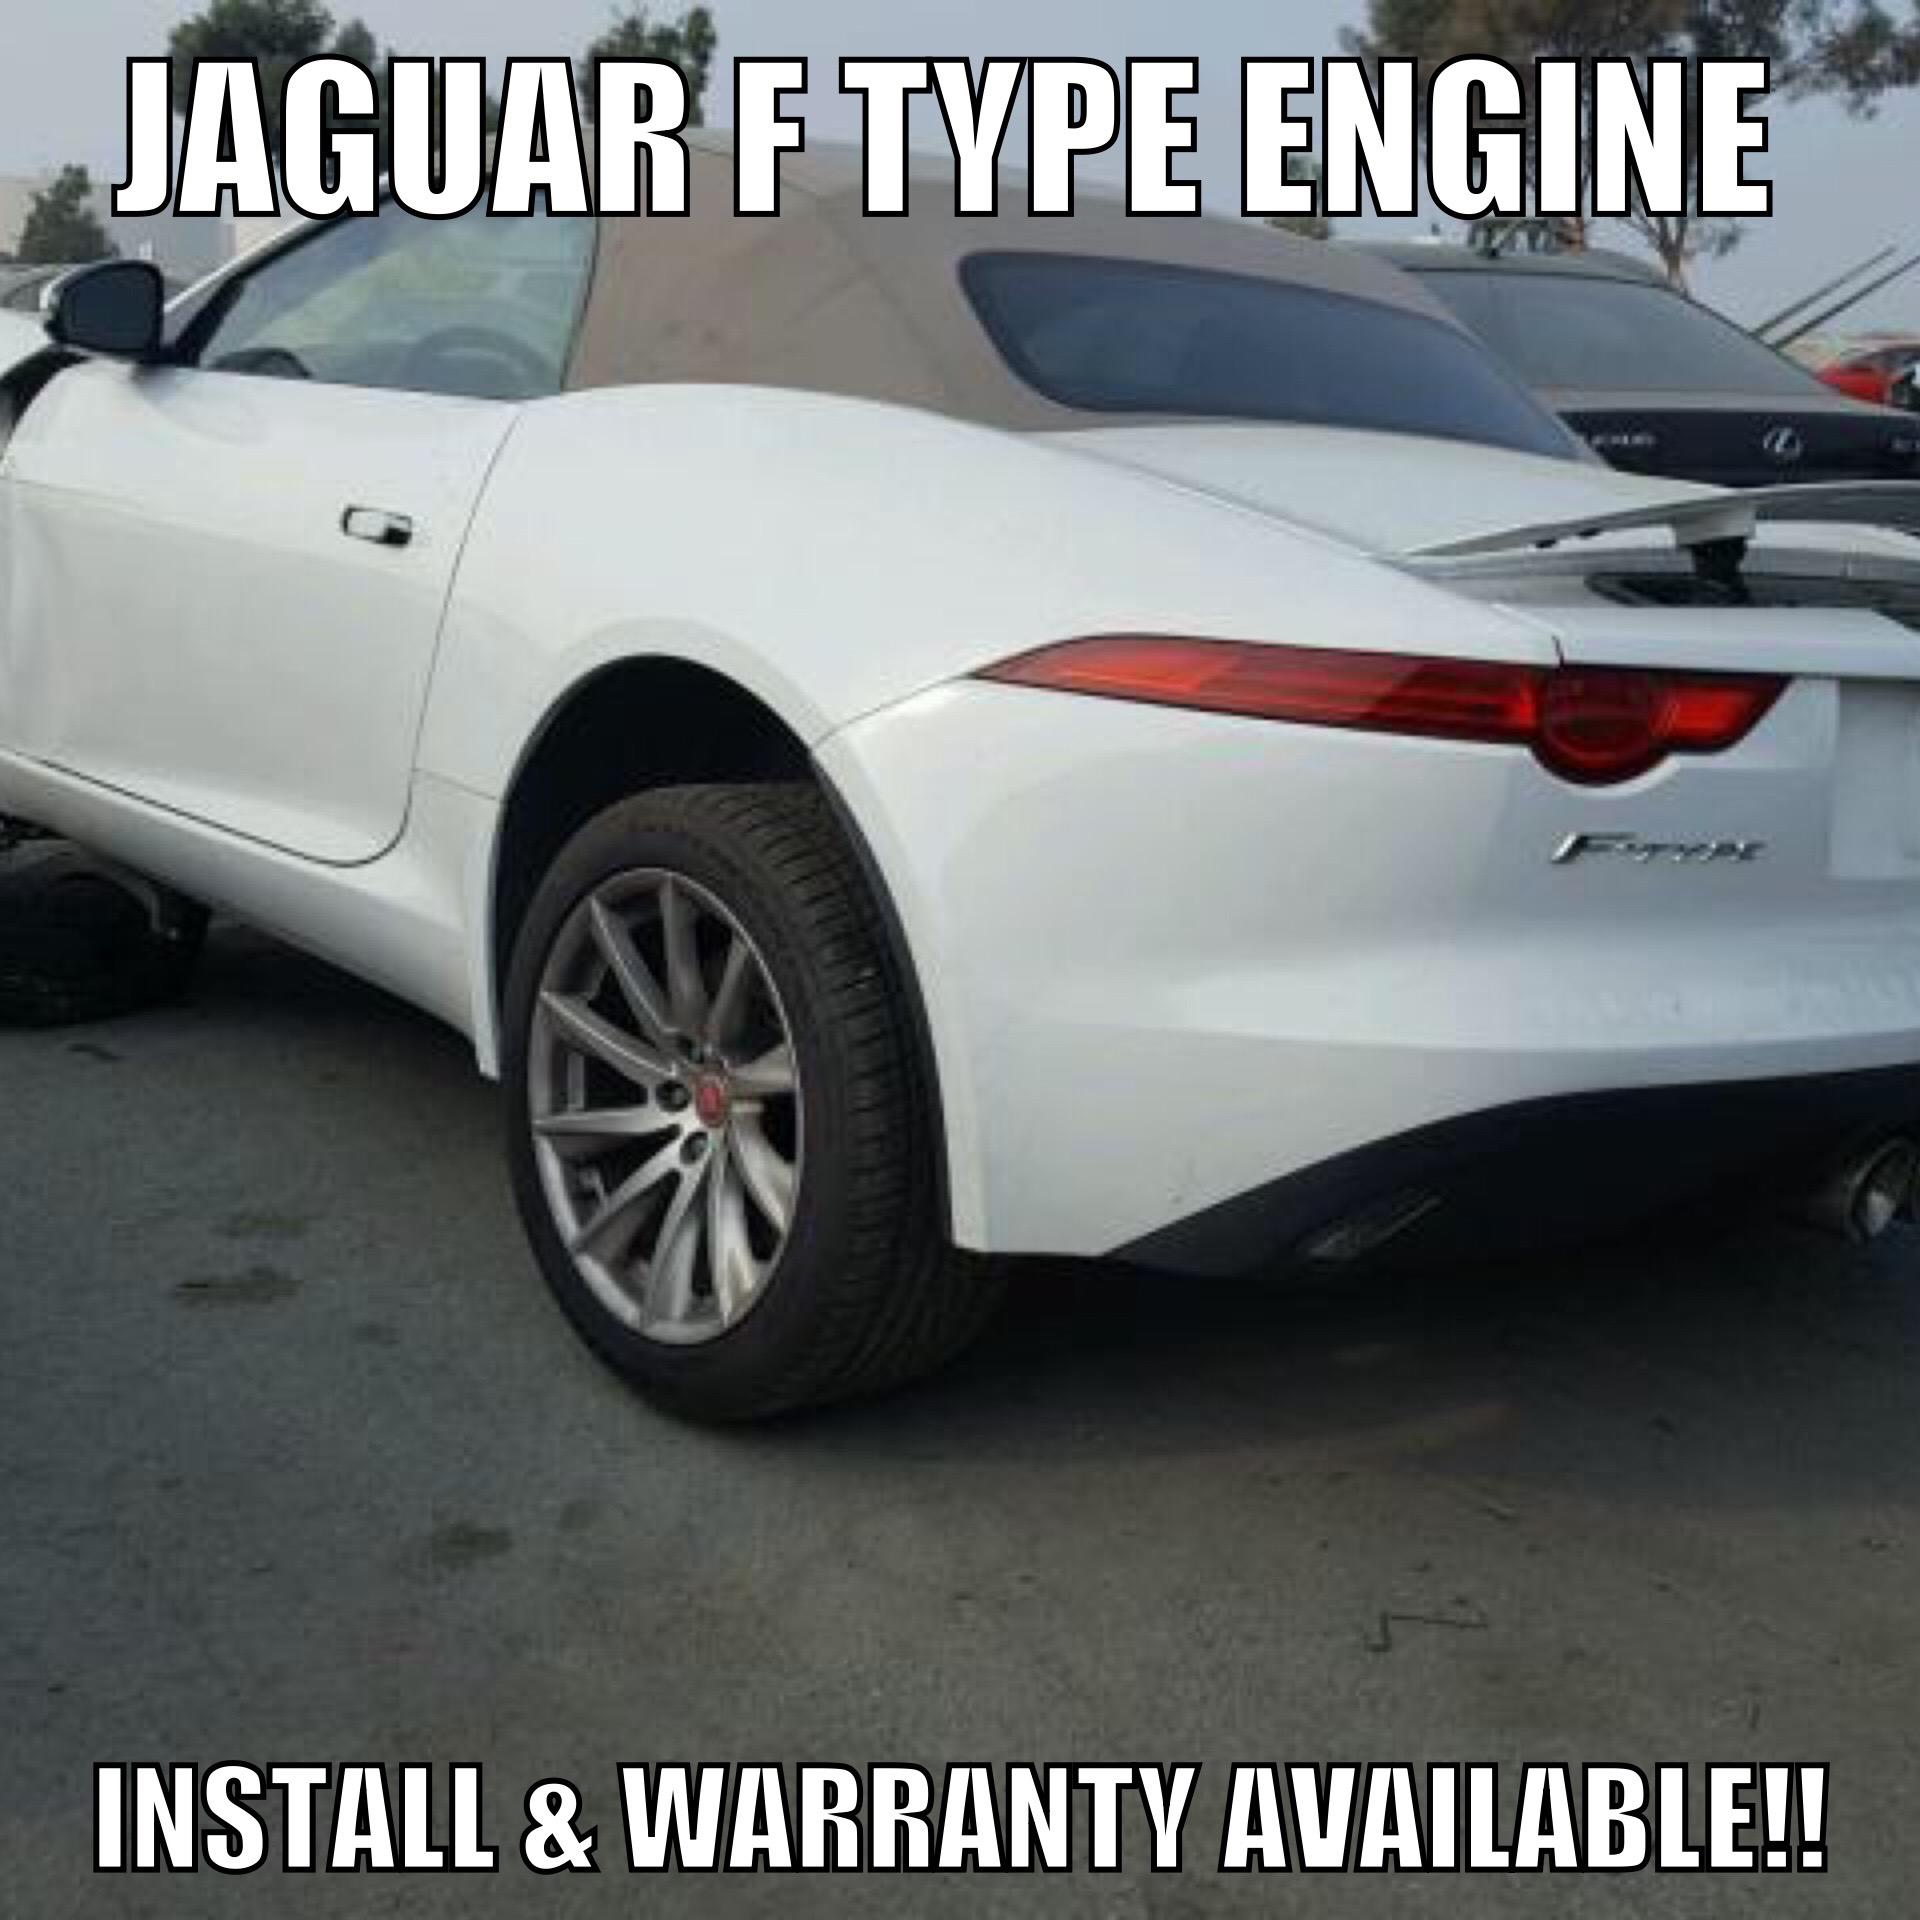 Jaguar F Type Engine